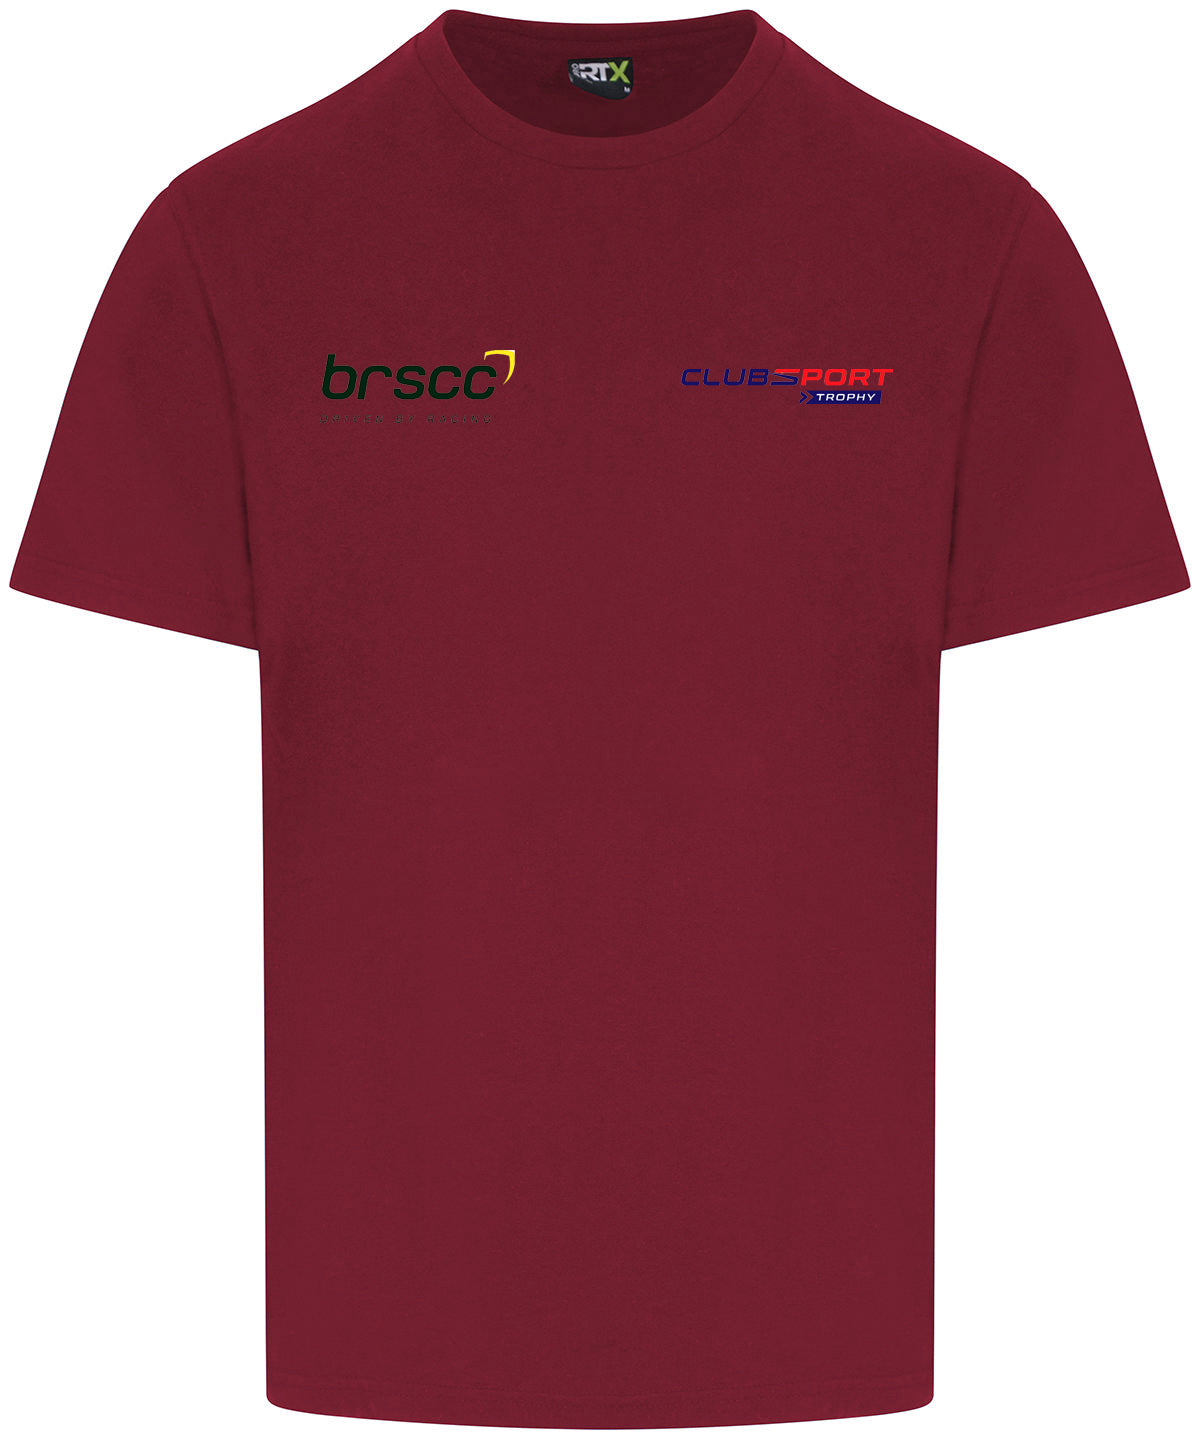 Clubsport Trophy Unisex T-Shirt